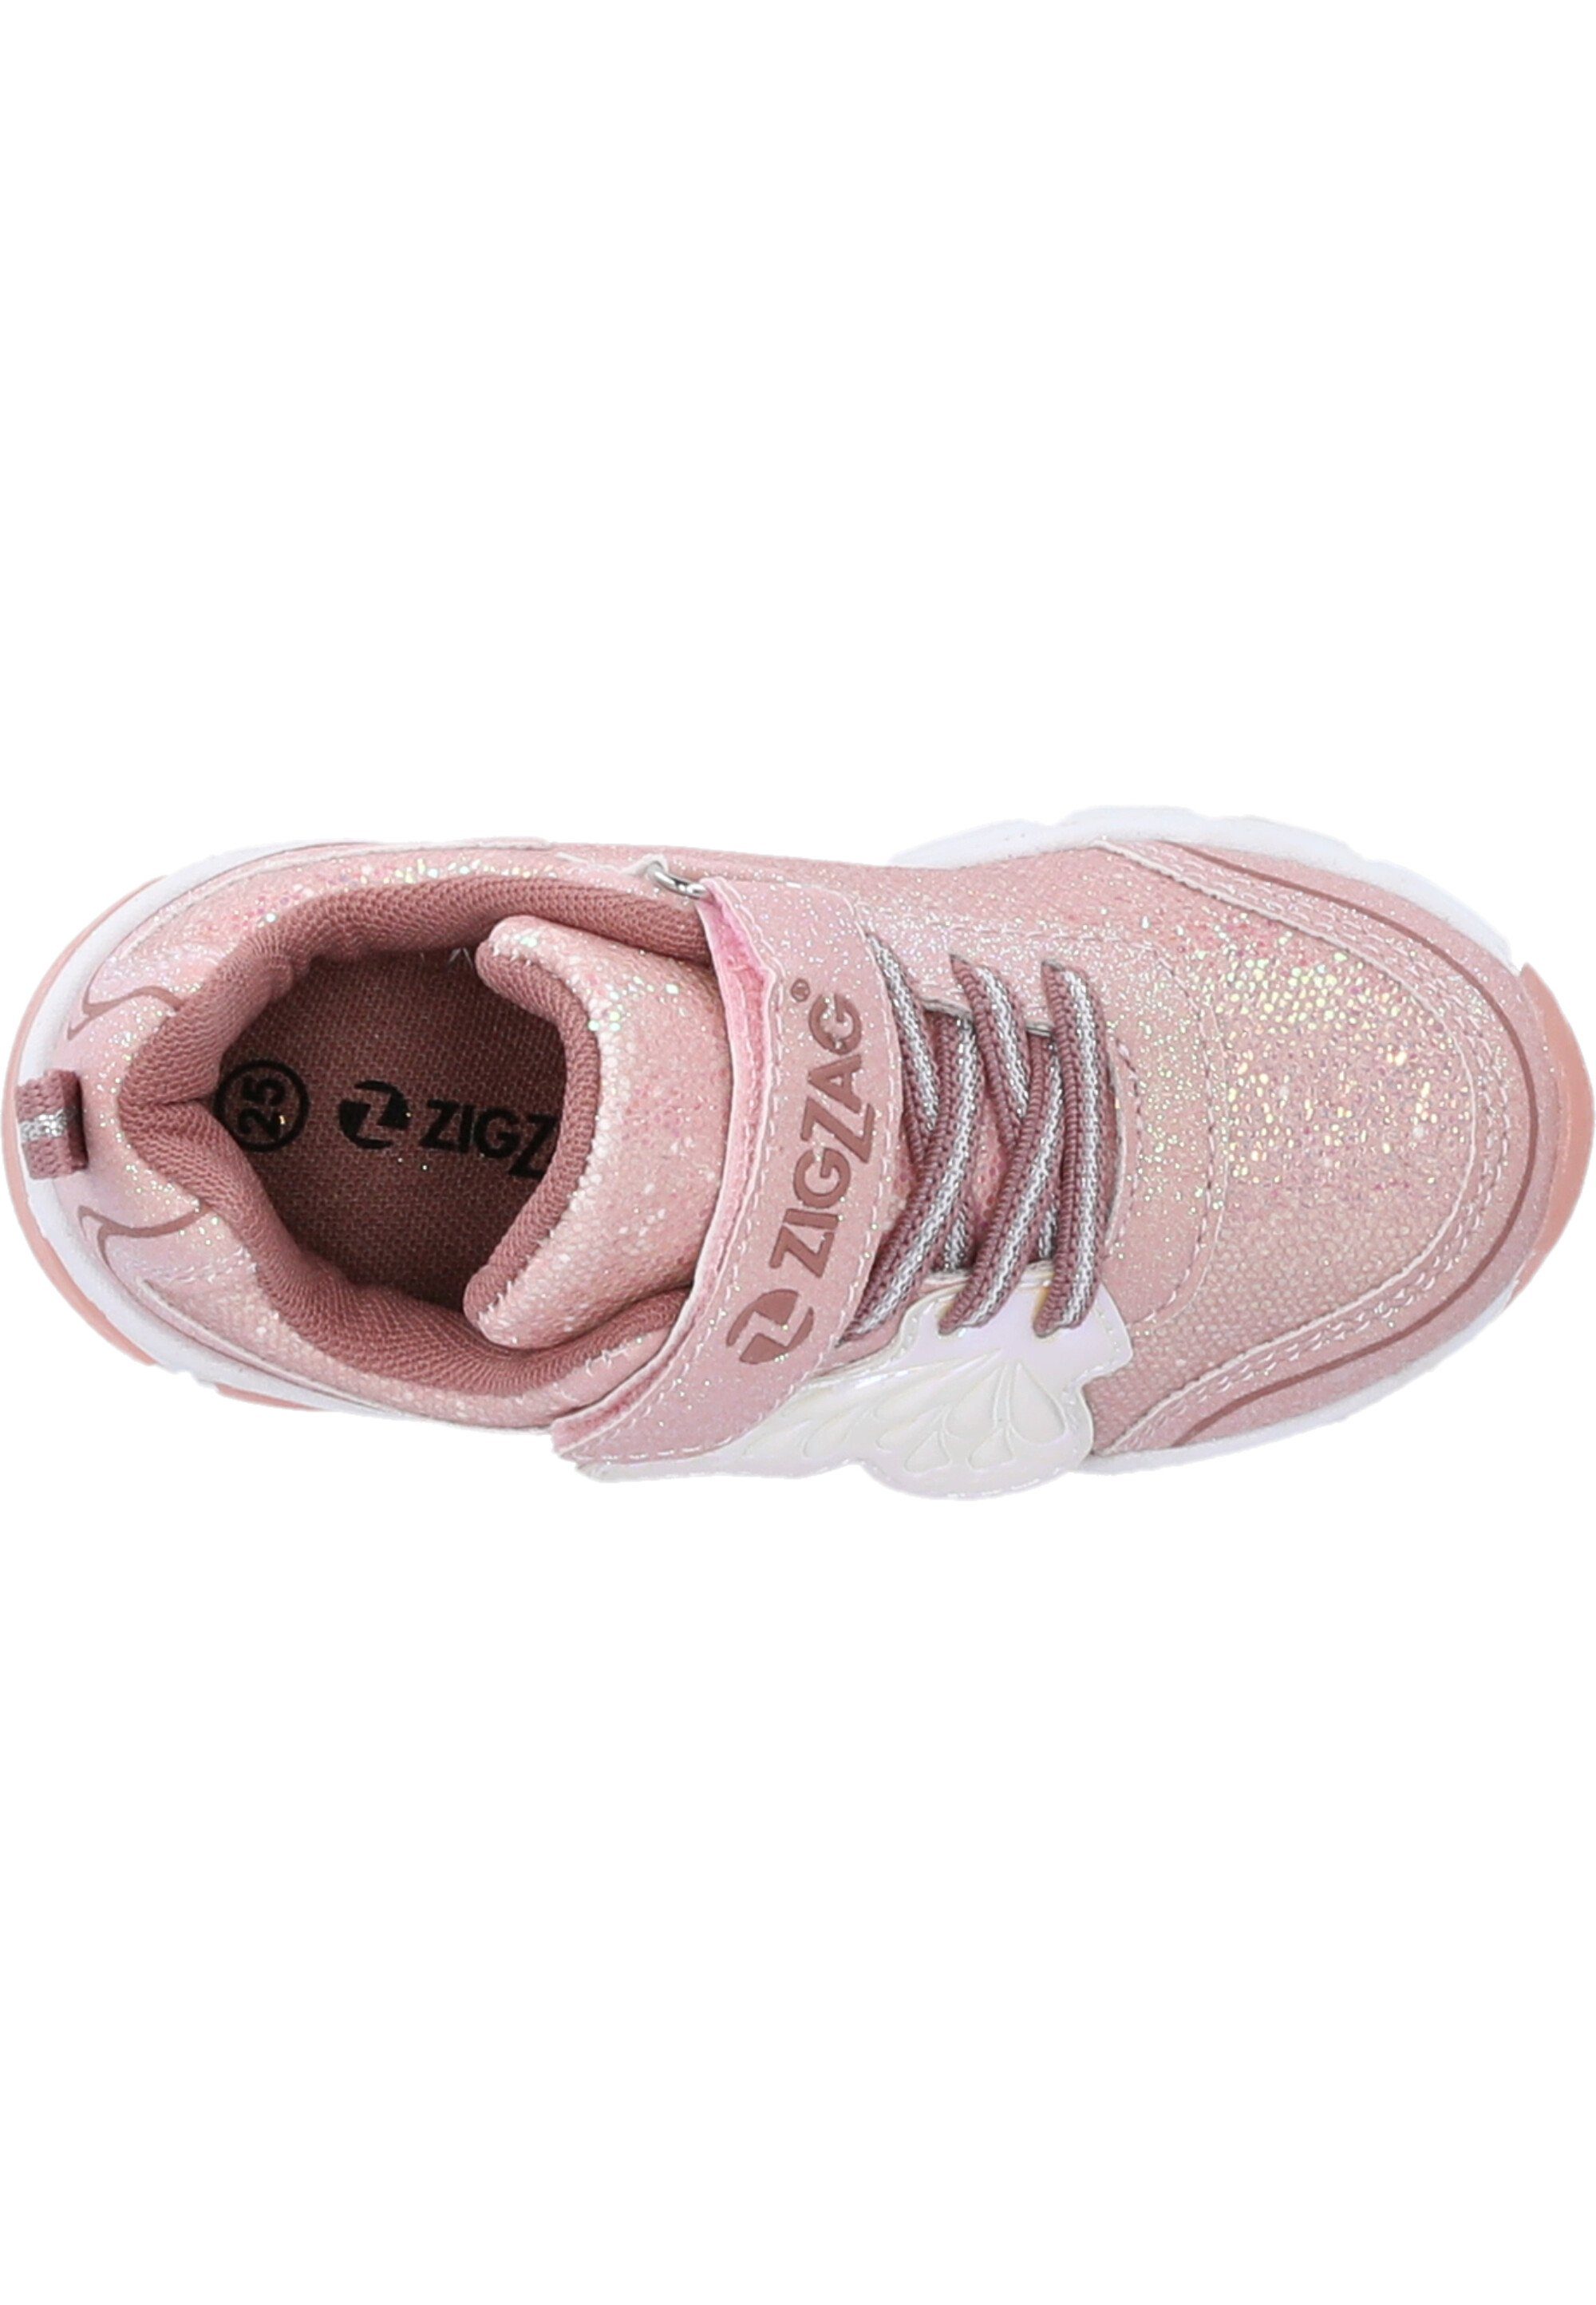 ZIGZAG Auhen Sneaker im Glitzer-Design trendigen rosa